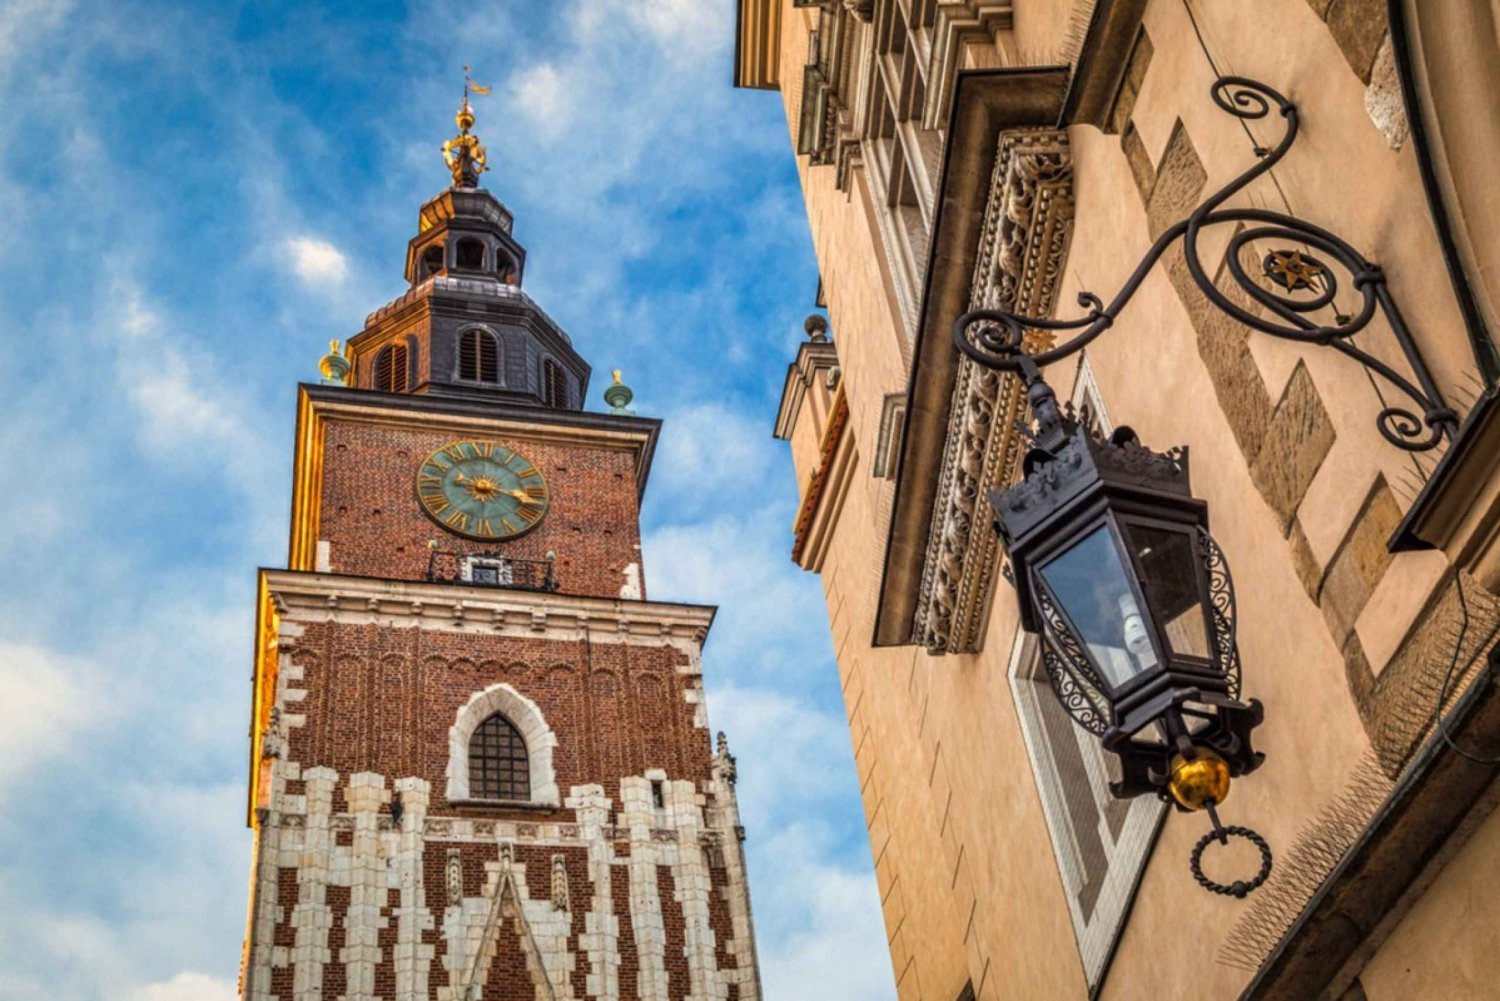 Krakau: Historische Altstadt Stadt Erkundungsspiel